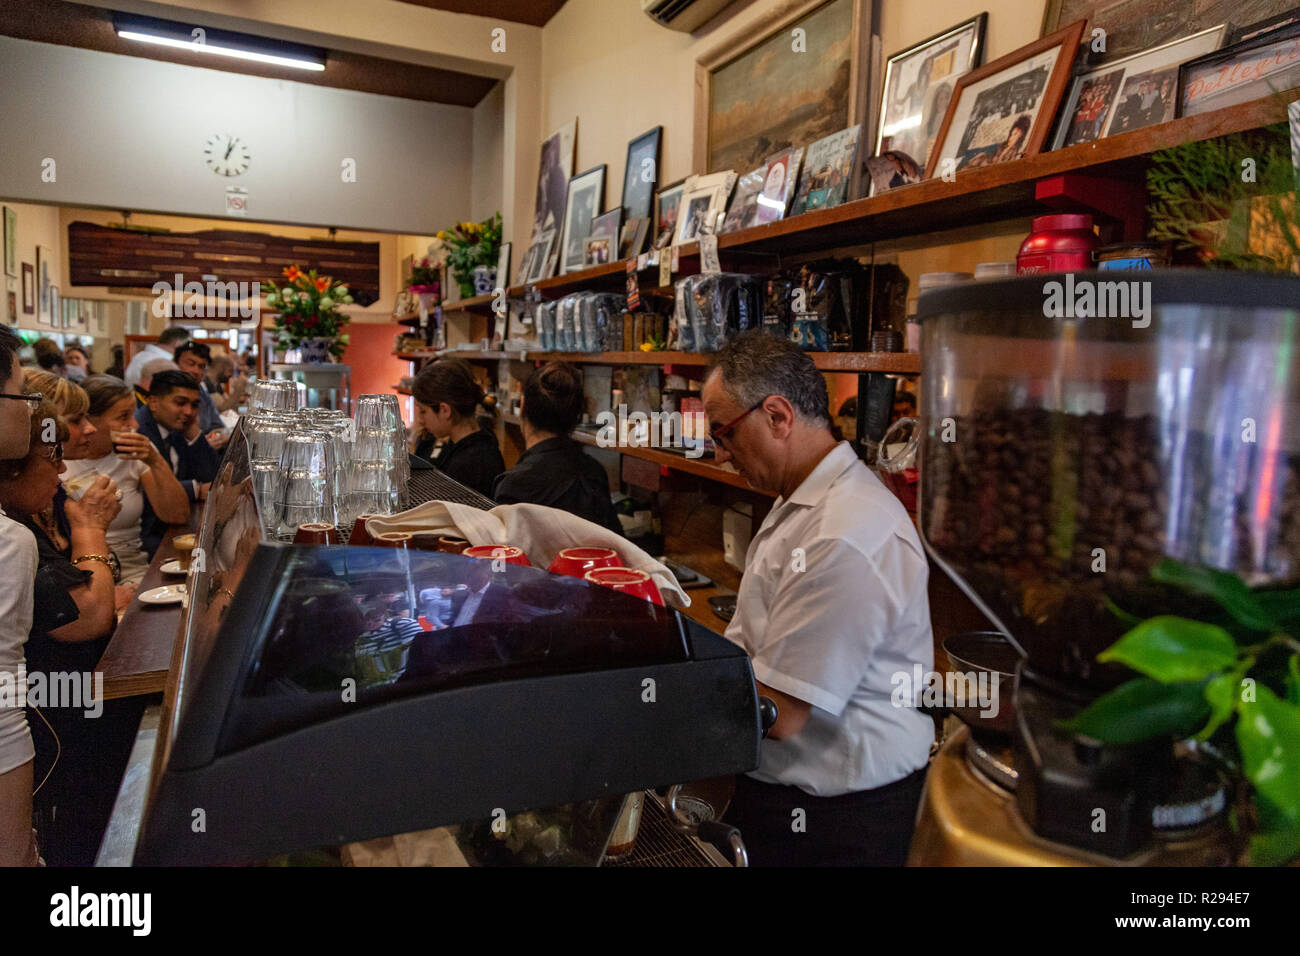 Nico chief barista of Pellegrini`s draws and serves coffee. Stock Photo